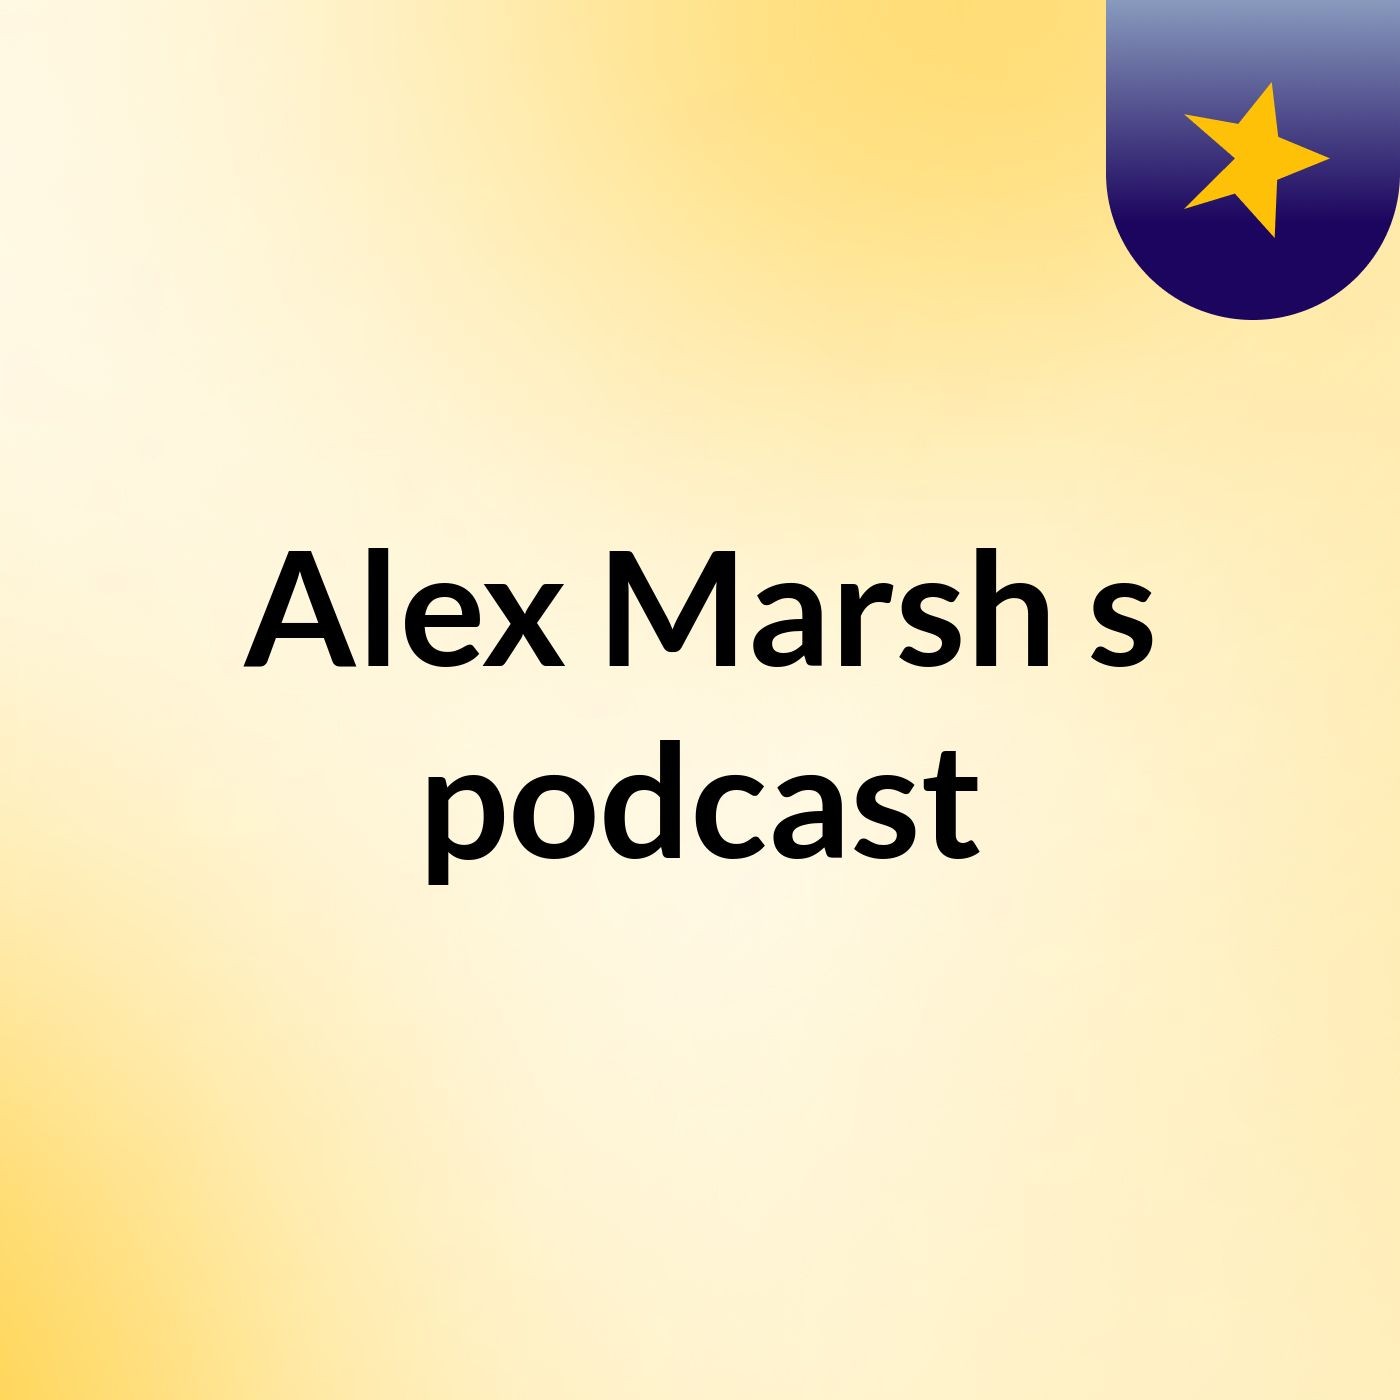 Alex Marsh's podcast